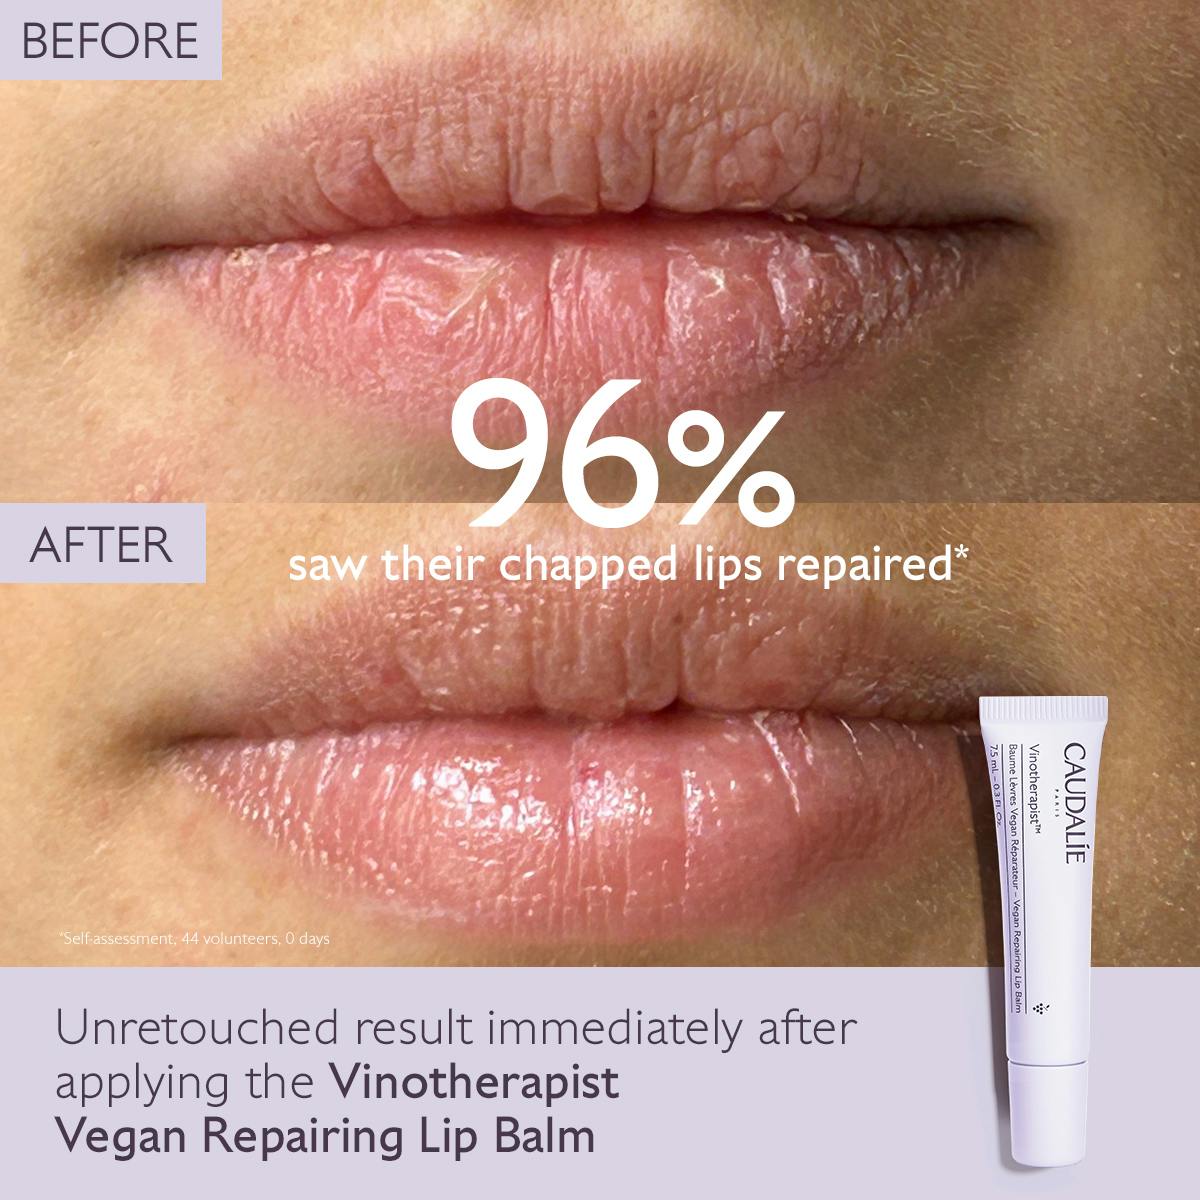 Vinotherapist™ Vegan Repairing Lip Balm